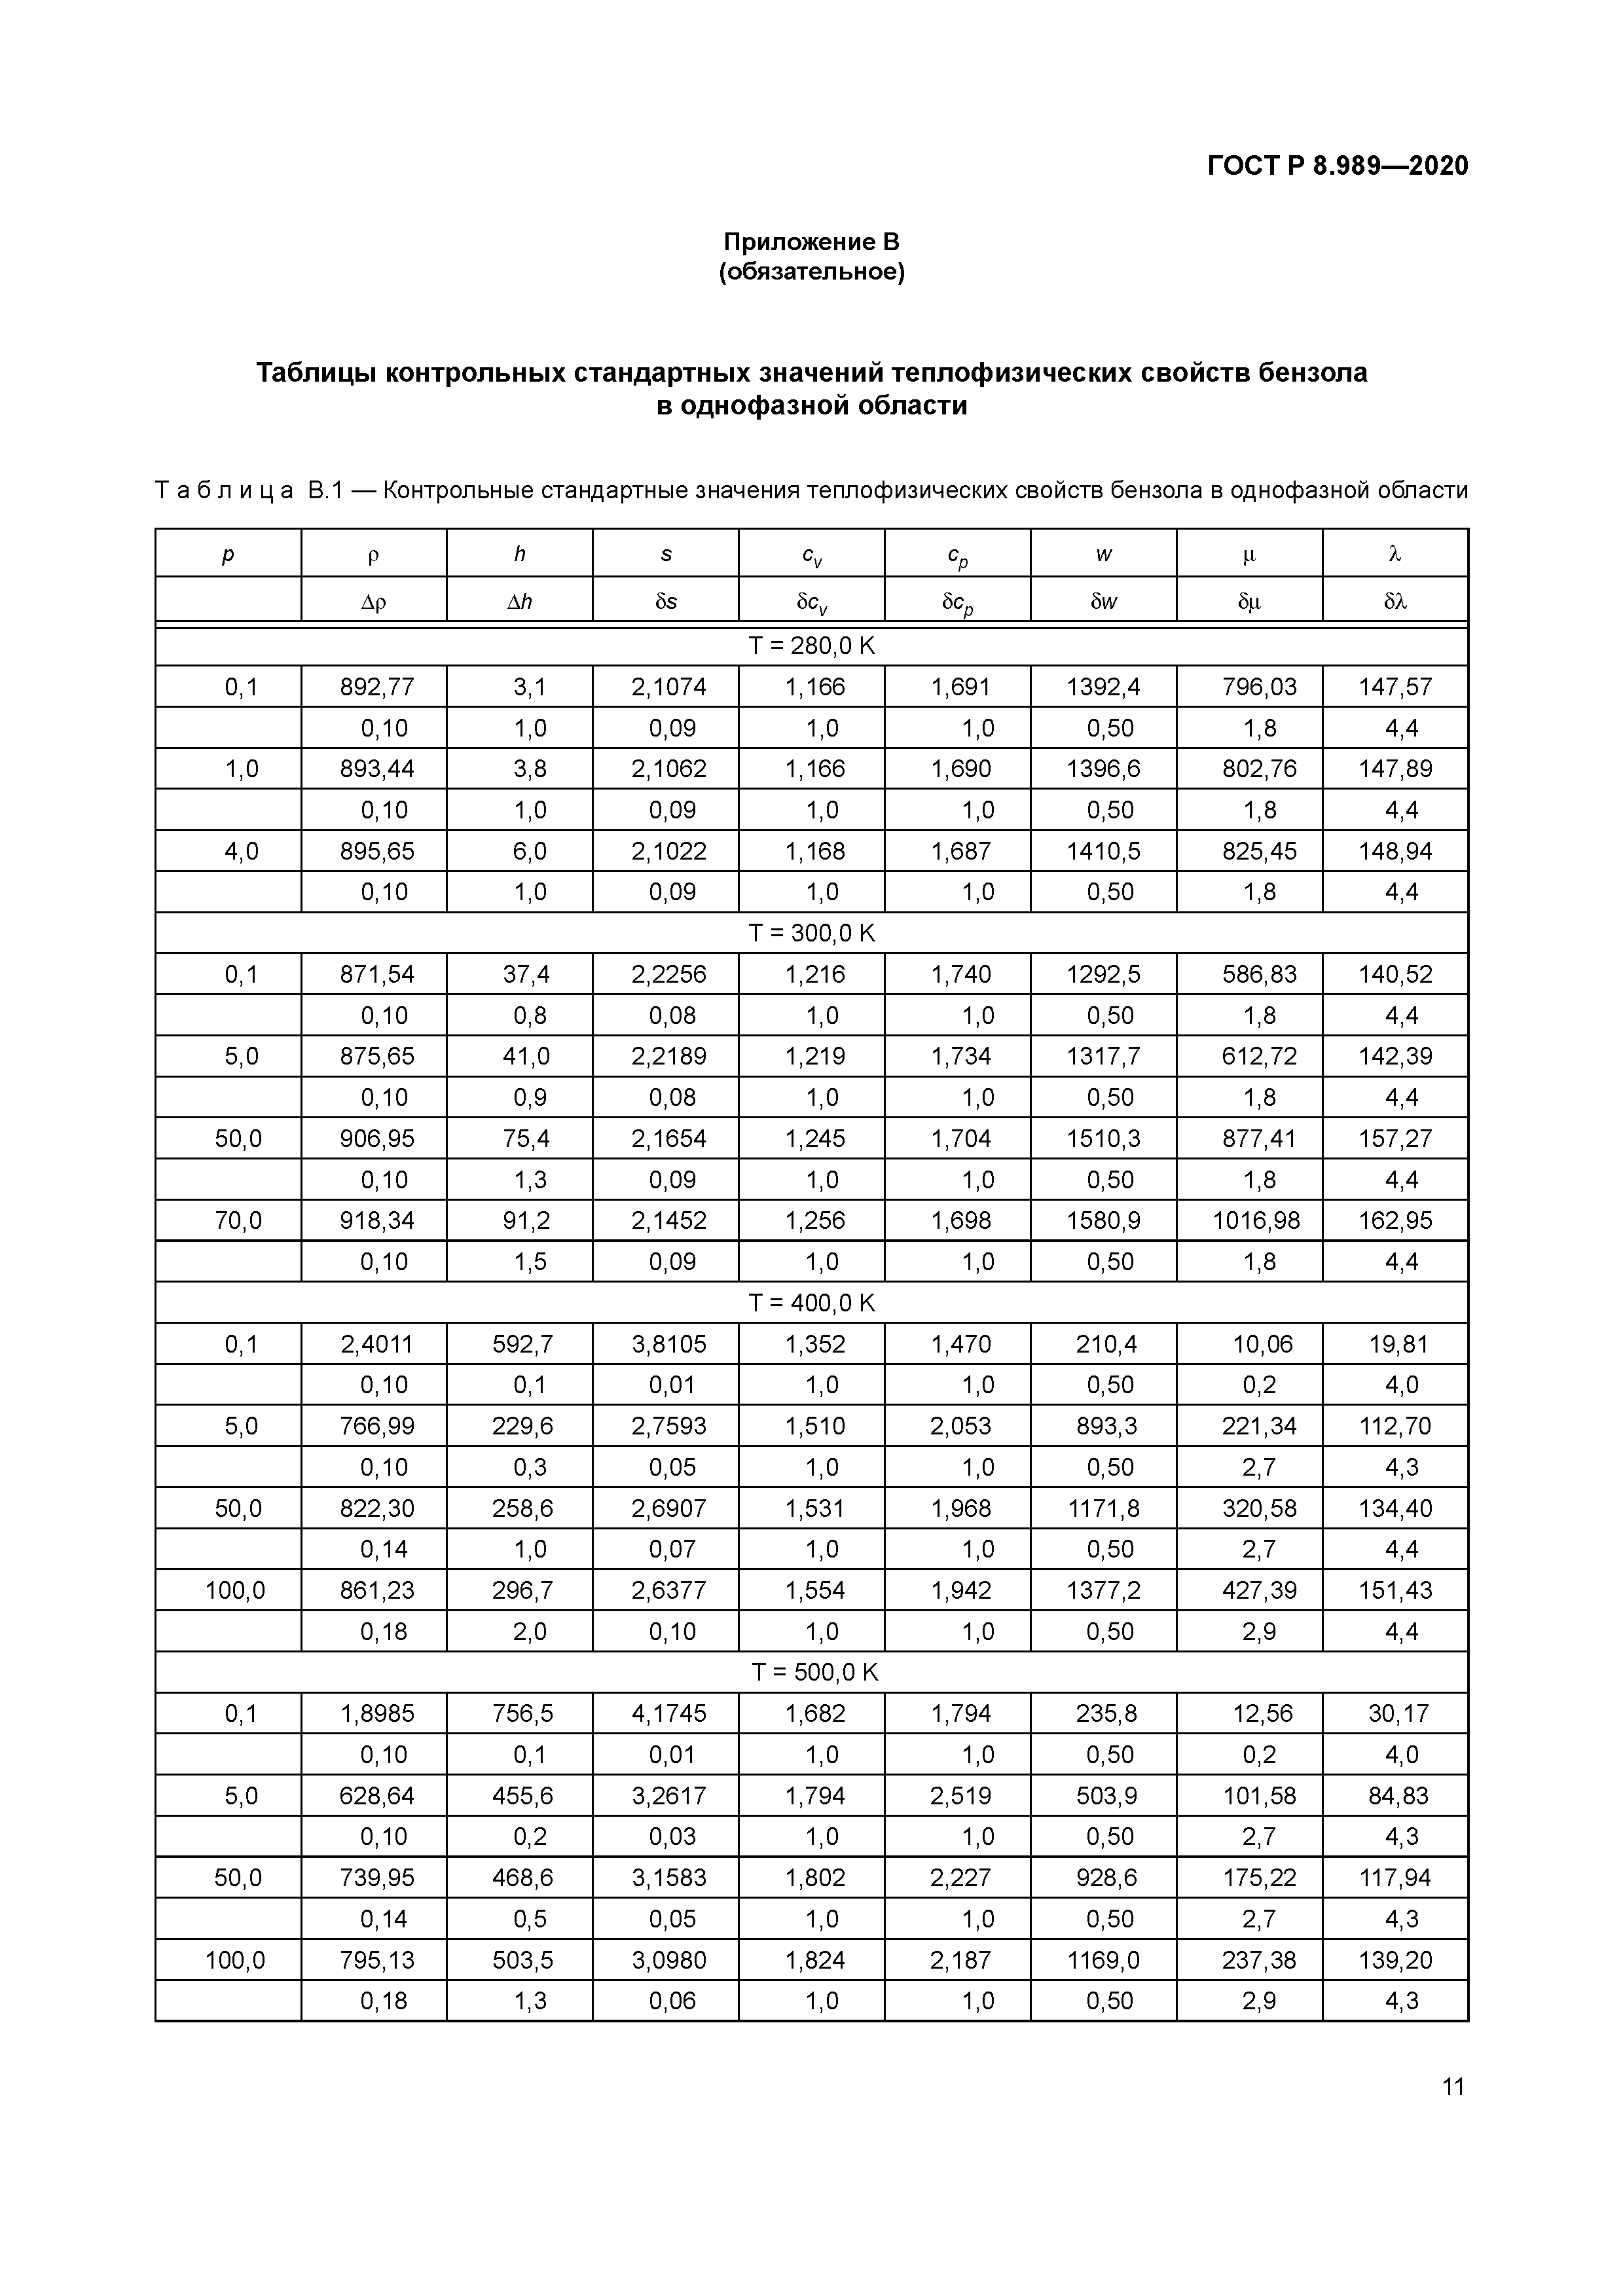 ГОСТ Р 8.989-2020